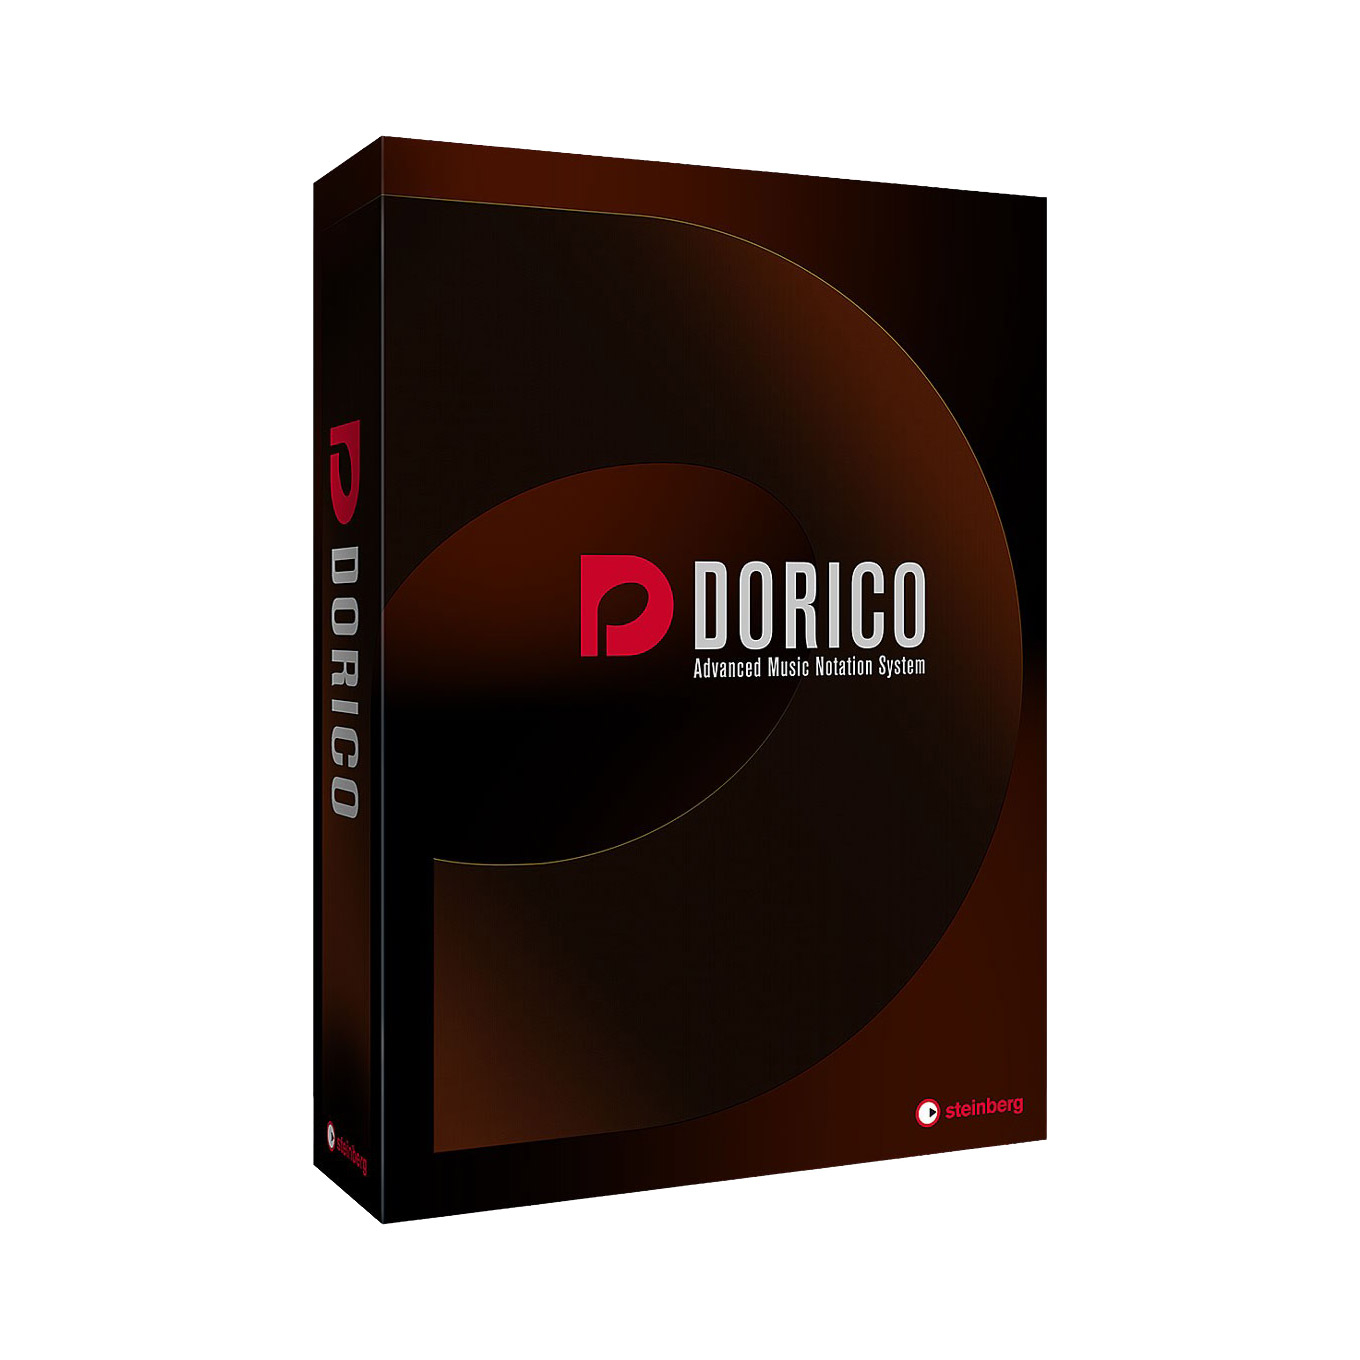 download the new Steinberg Dorico Pro 5.0.20